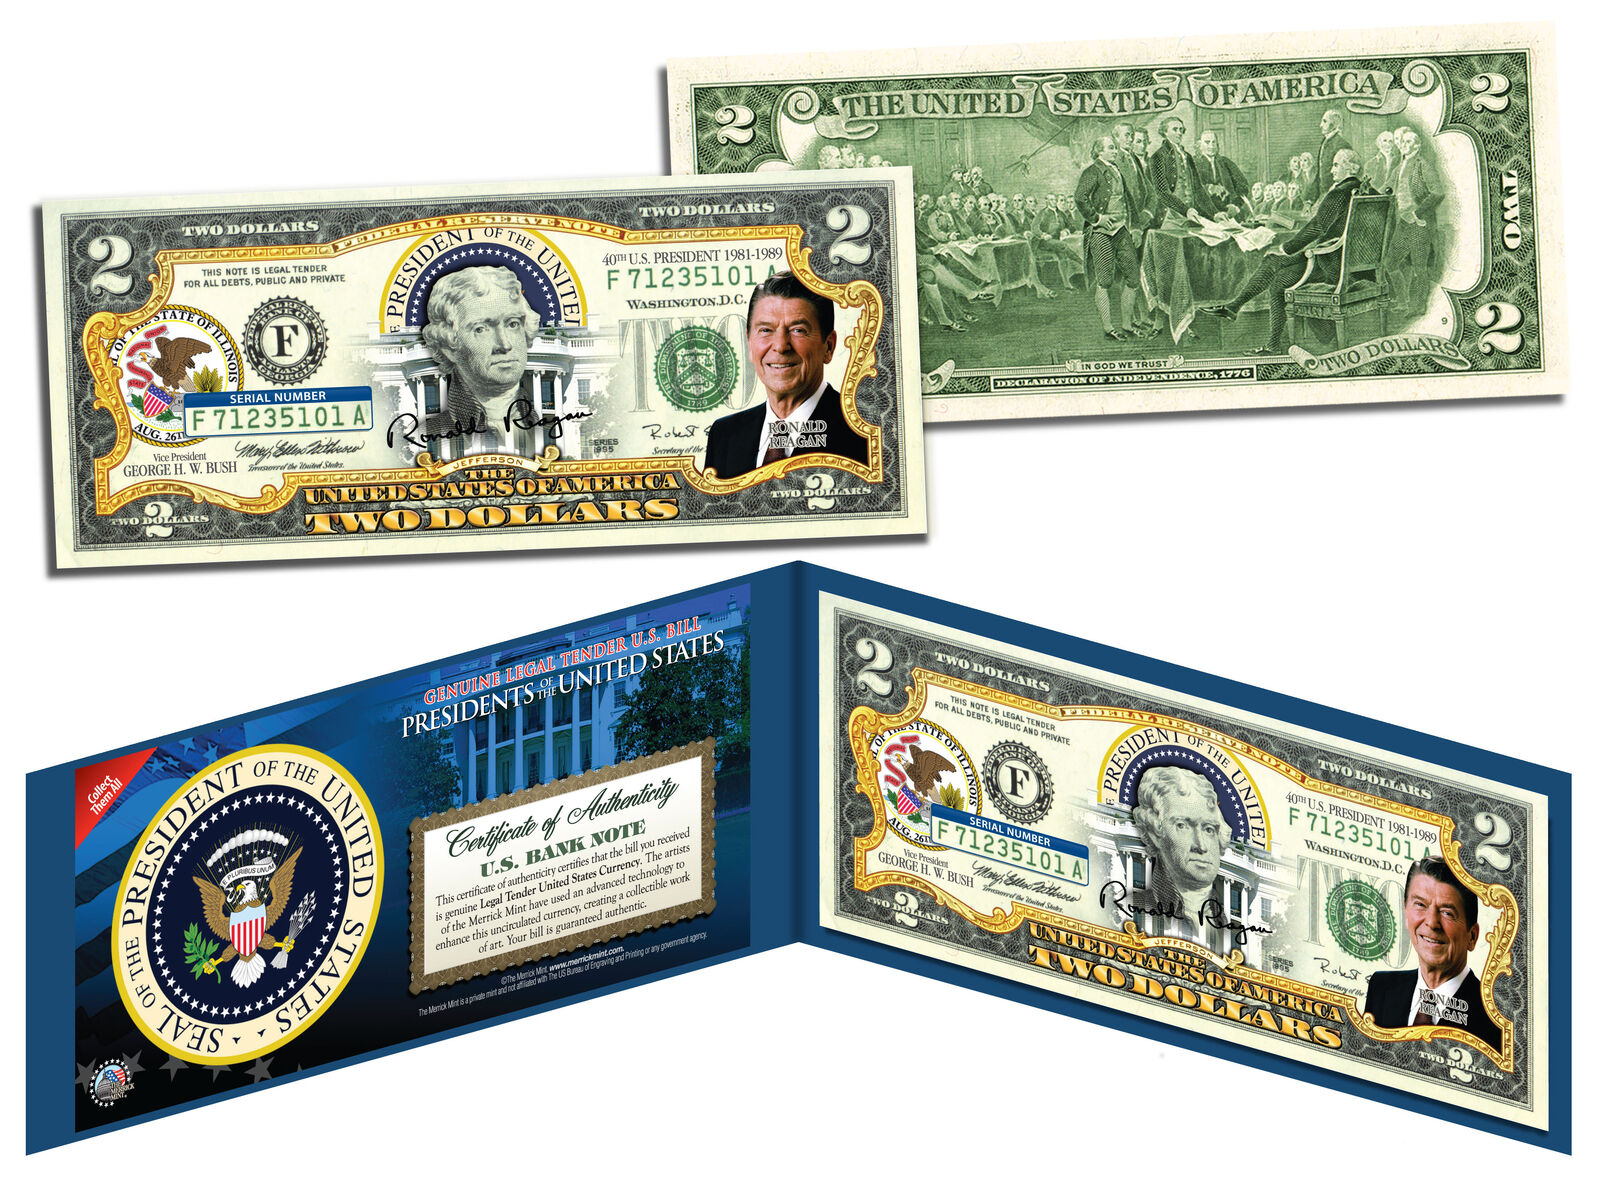 RONALD REAGAN * 40th U.S. President * Colorized $2 Bill US Genuine Legal Tender